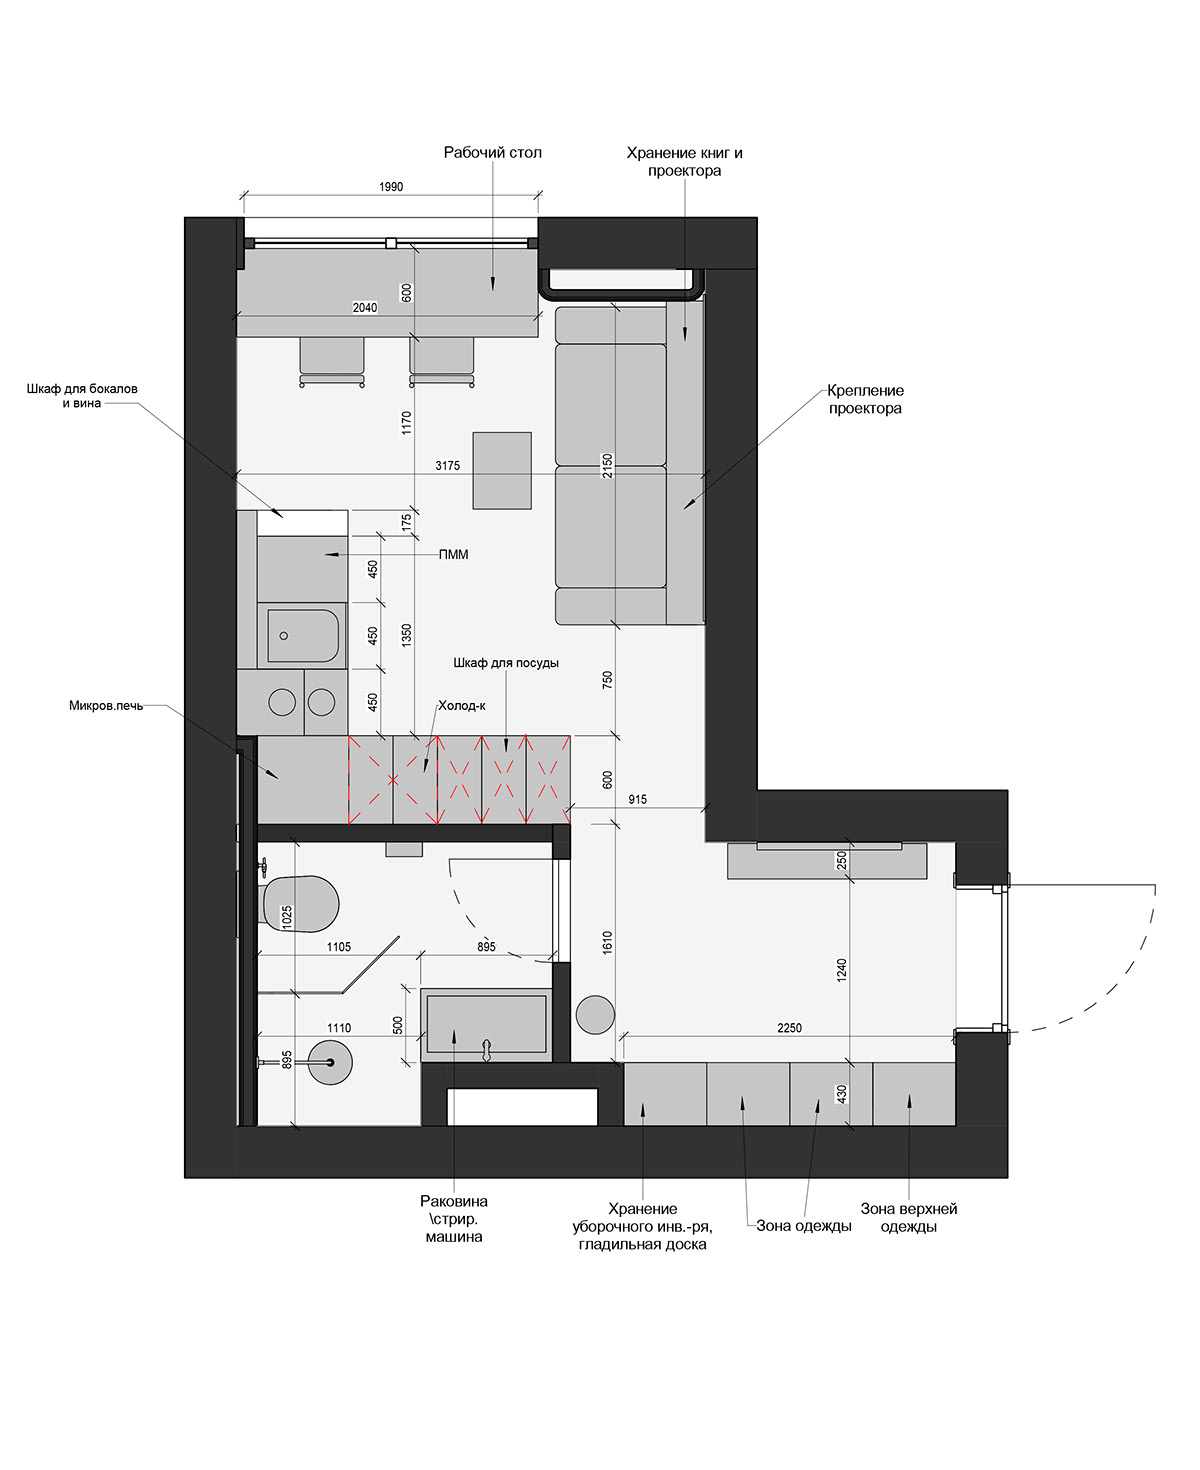 3ds max architecture Render studio small apartment